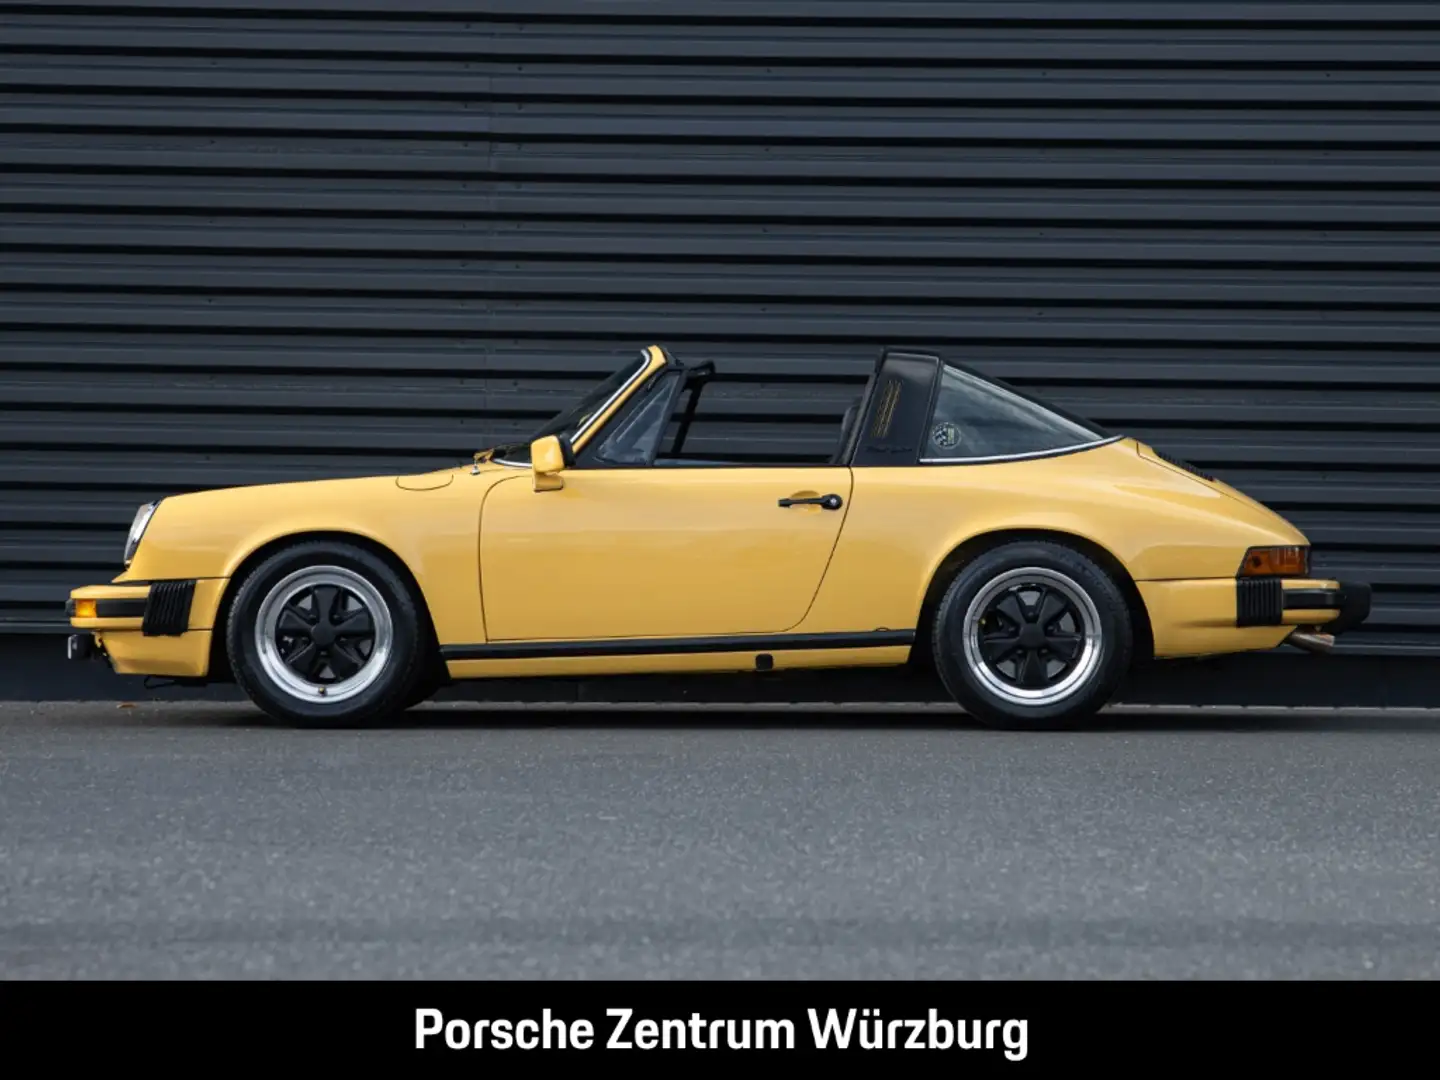 Porsche Targa g-model (911) Yellow - 2